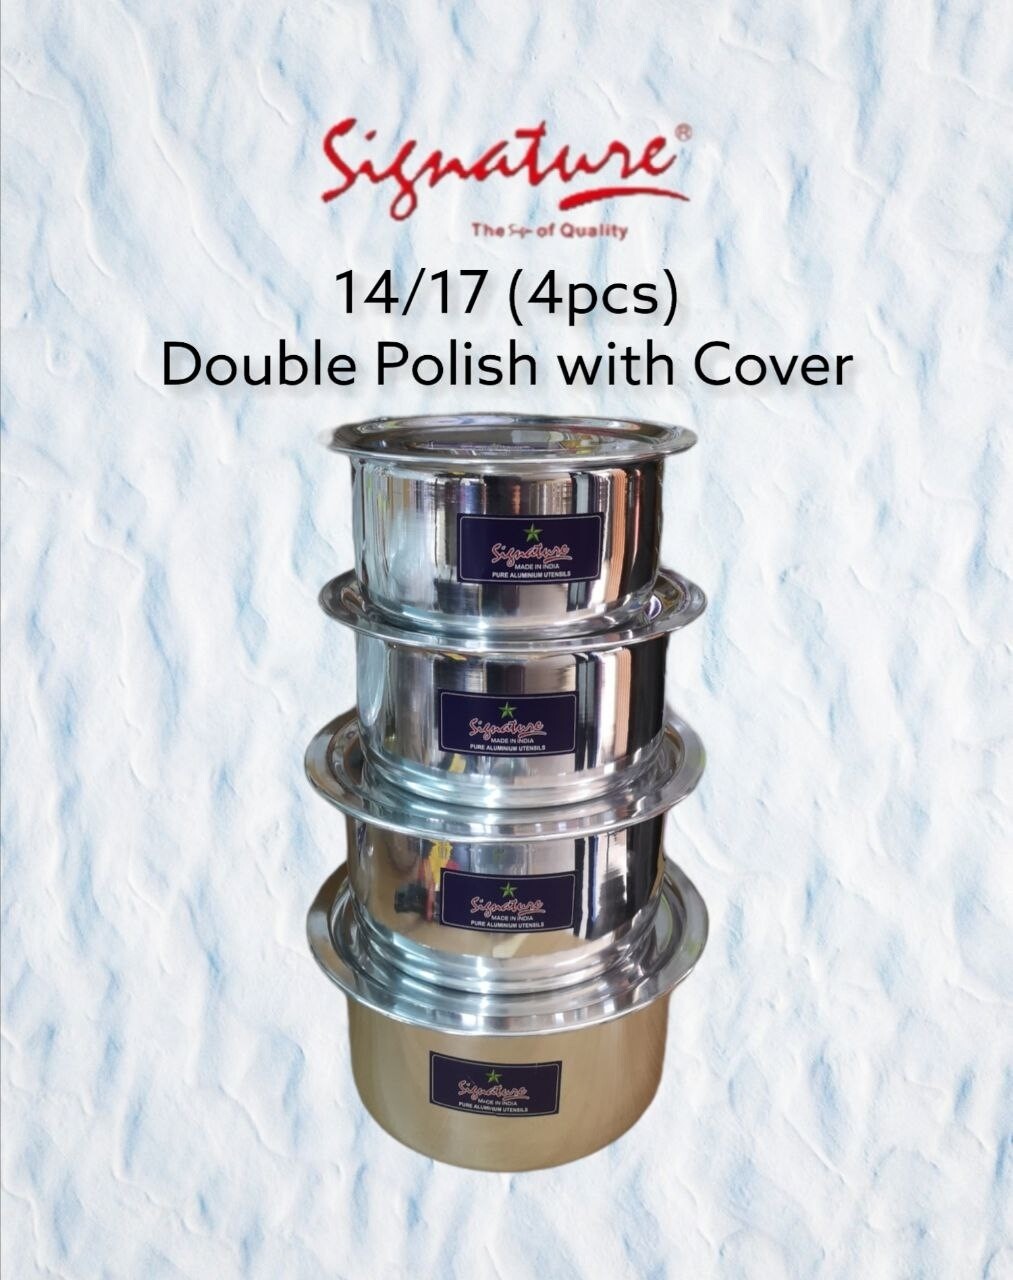 Signature extra heavy duty aluminum sufurias double polish & cover 4pcs set (size14,15,16,17)